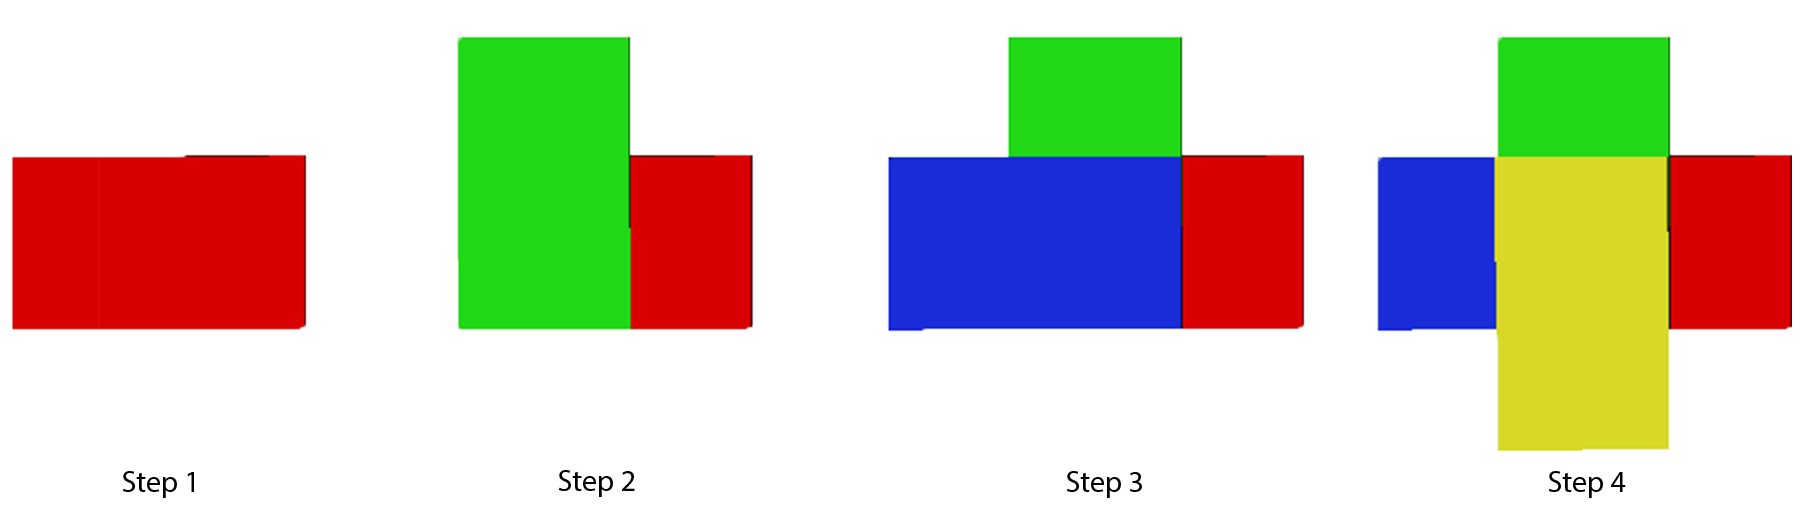 Calibration Assembling (Top-View)